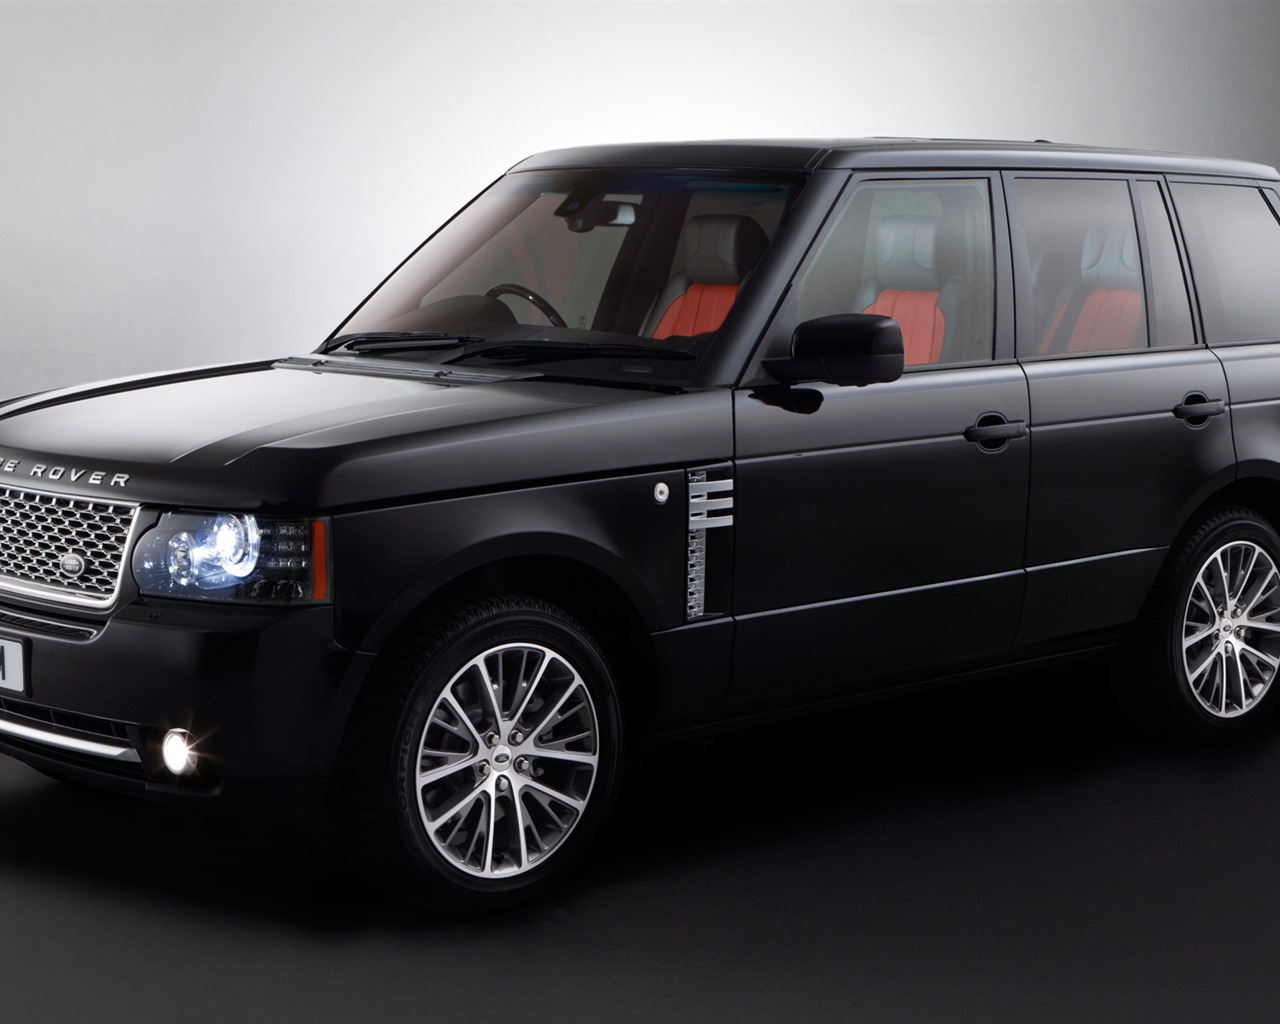 Land Rover Range Rover Black Edition - 2011 路虎18 - 1280x1024